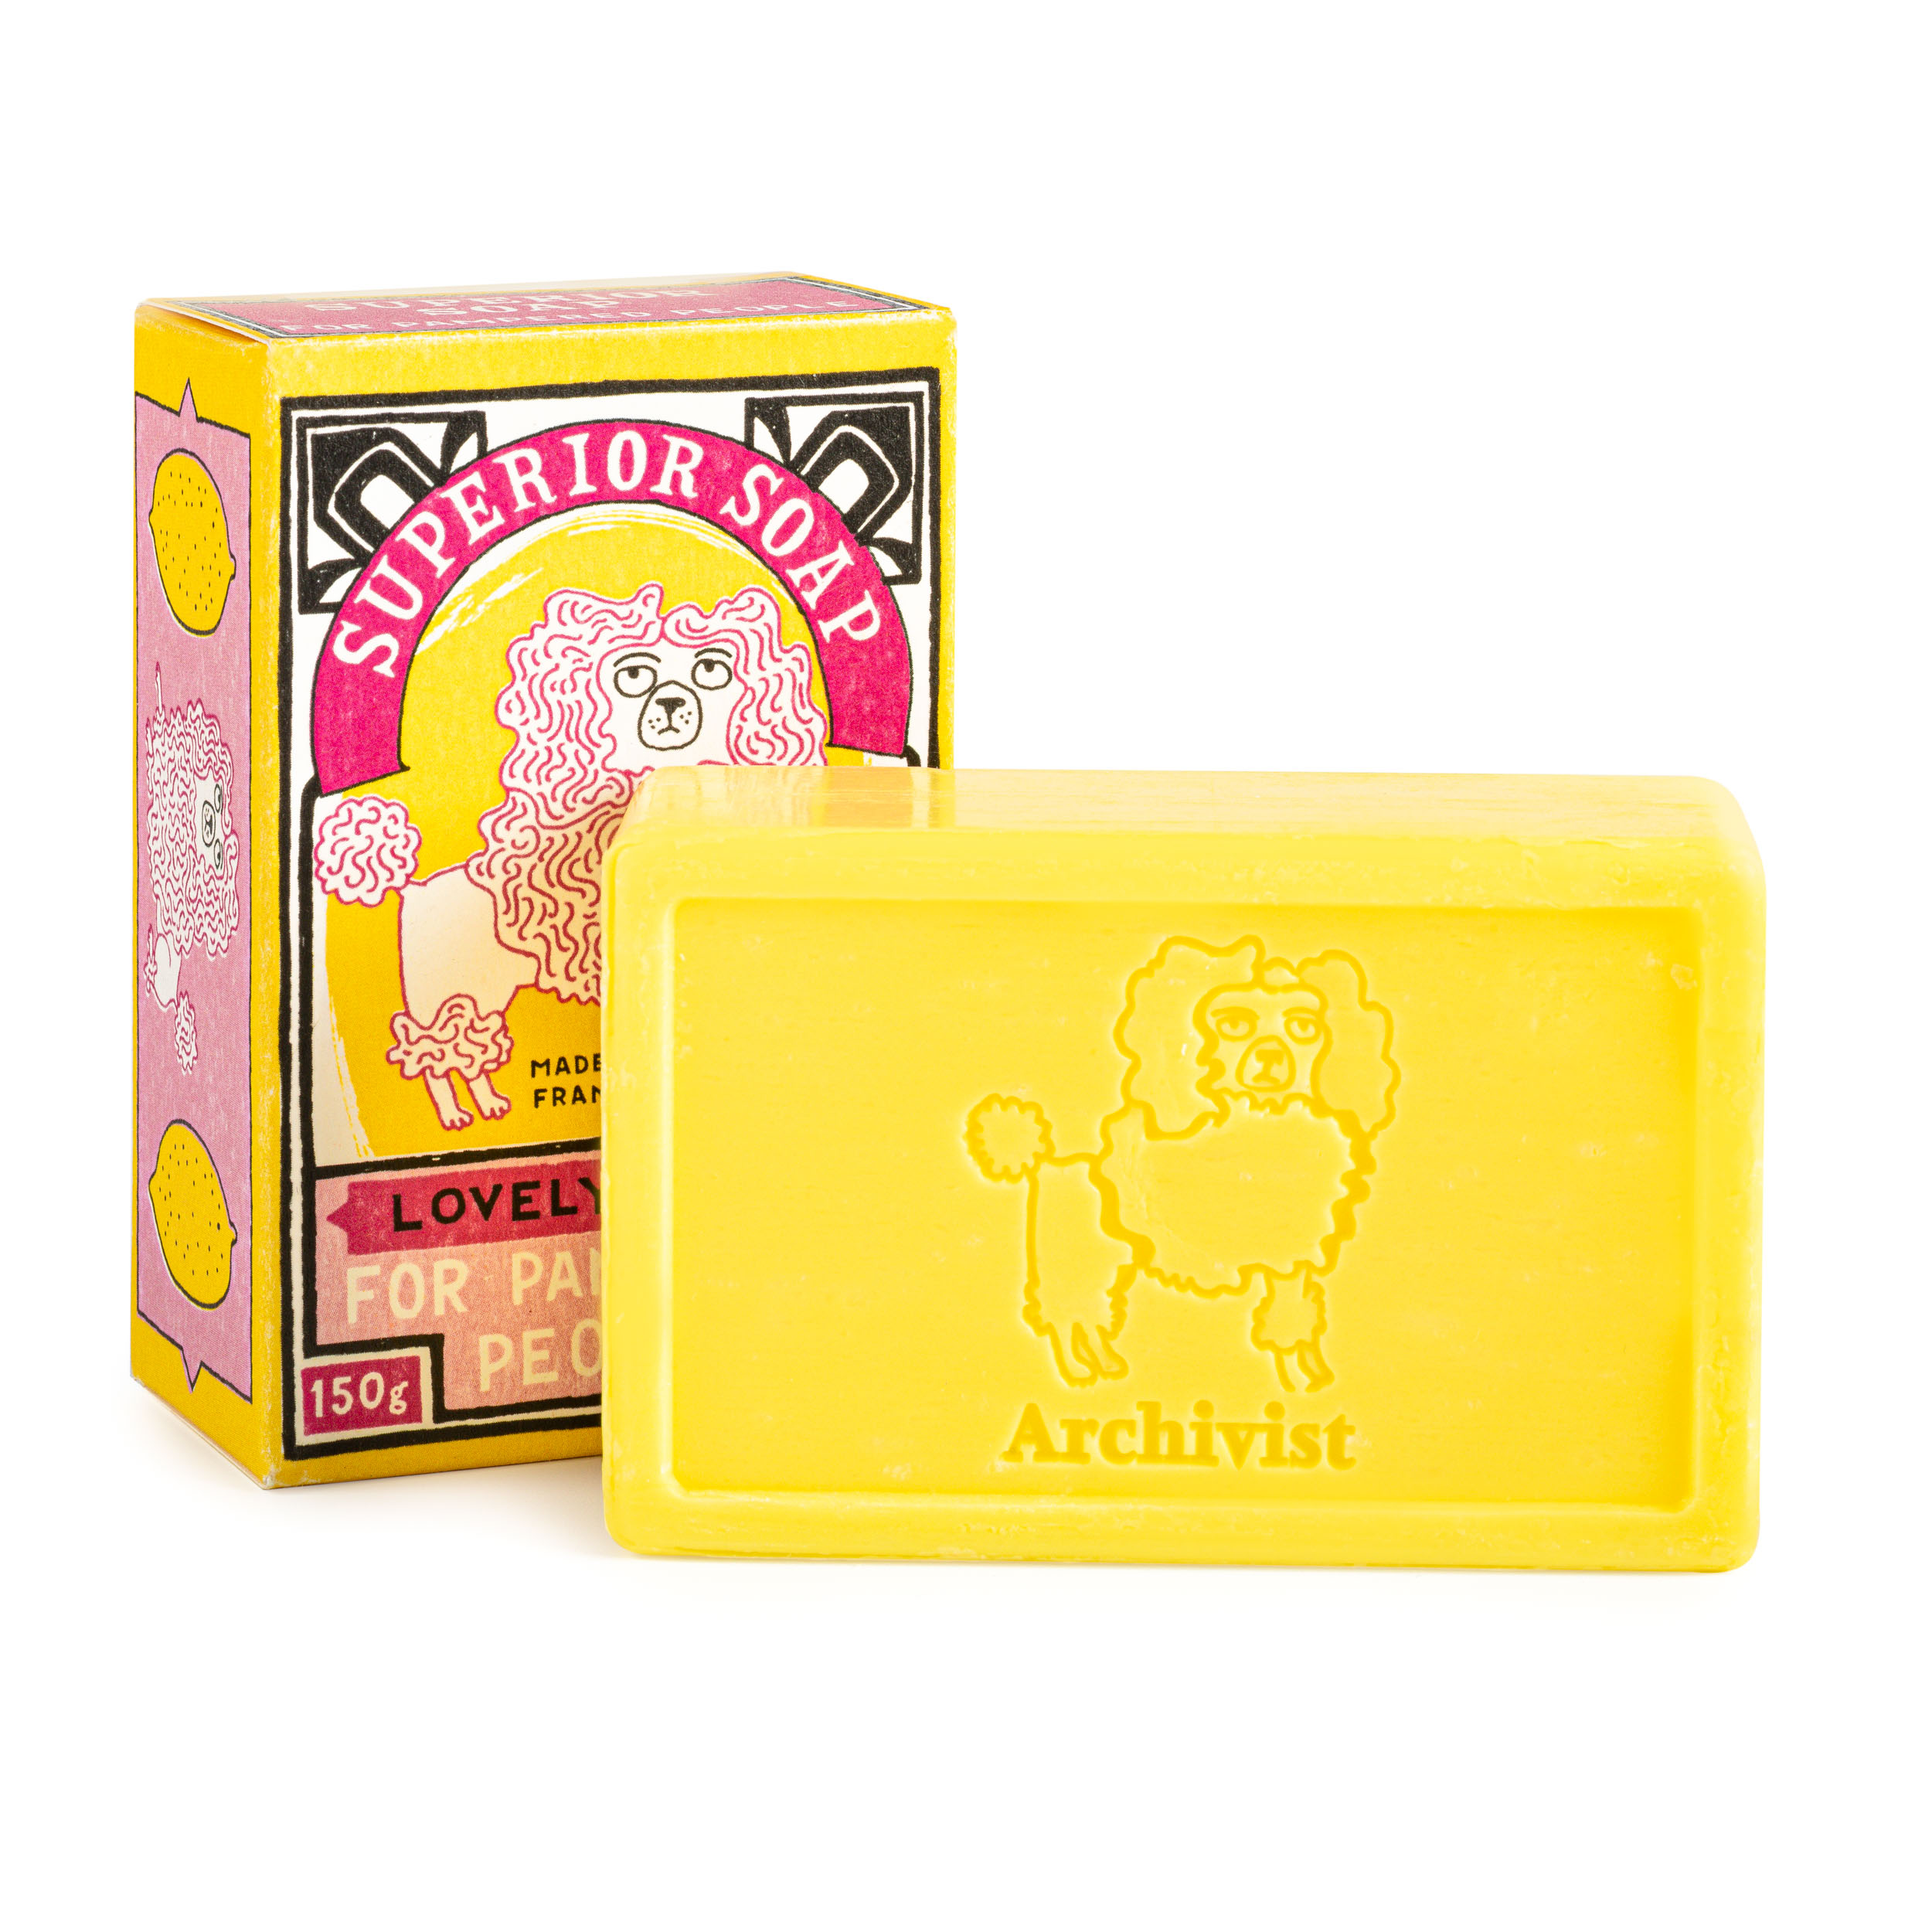 Lemon Hand Soap - Soap - Charlotte Farmer - from Archivist Gallery 